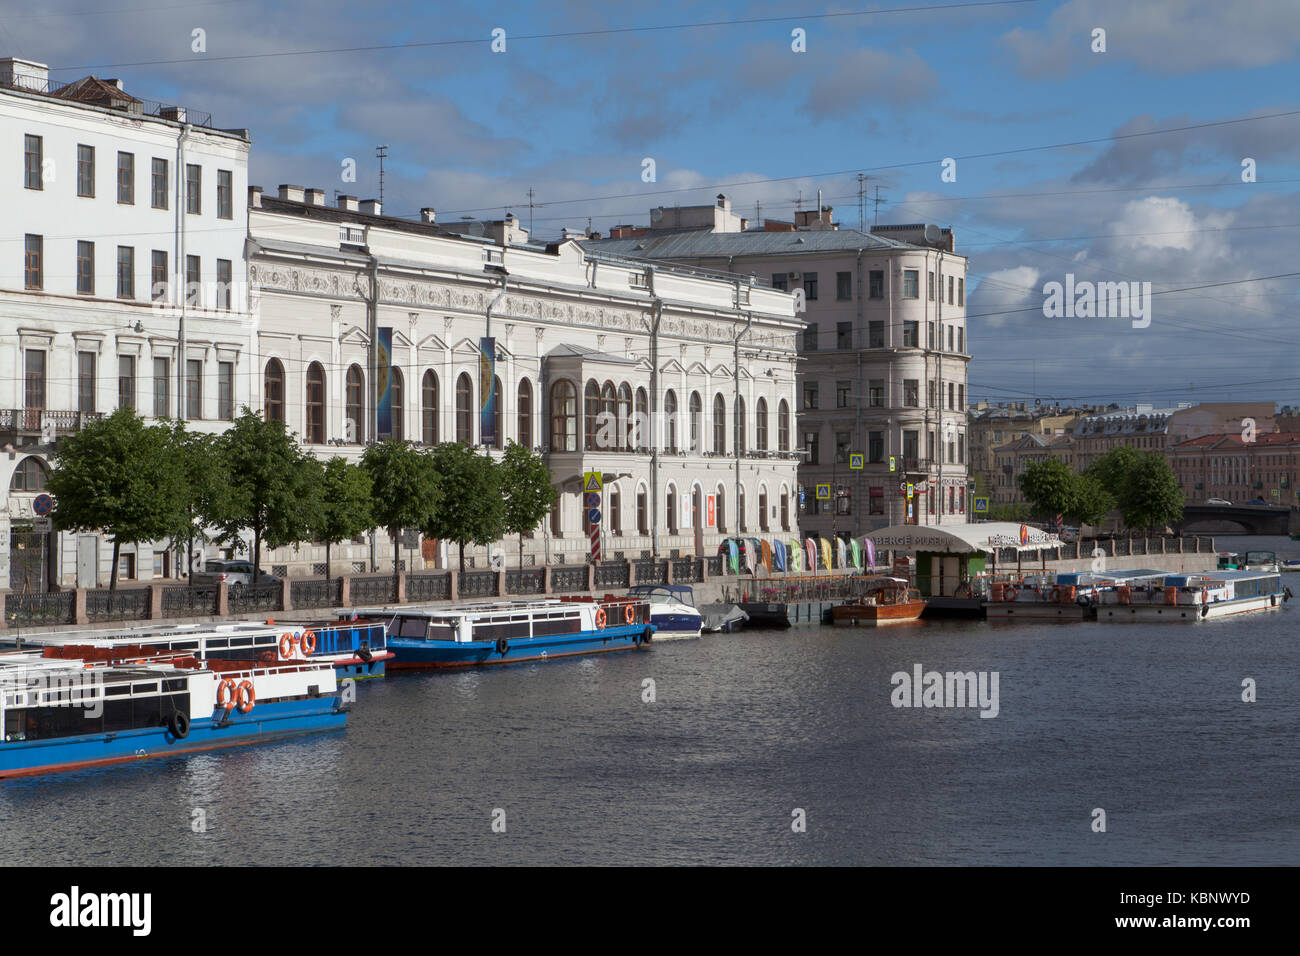 The Faberge Museum and Fontanka River Embankment, Saint Petersburg, Russia. Stock Photo